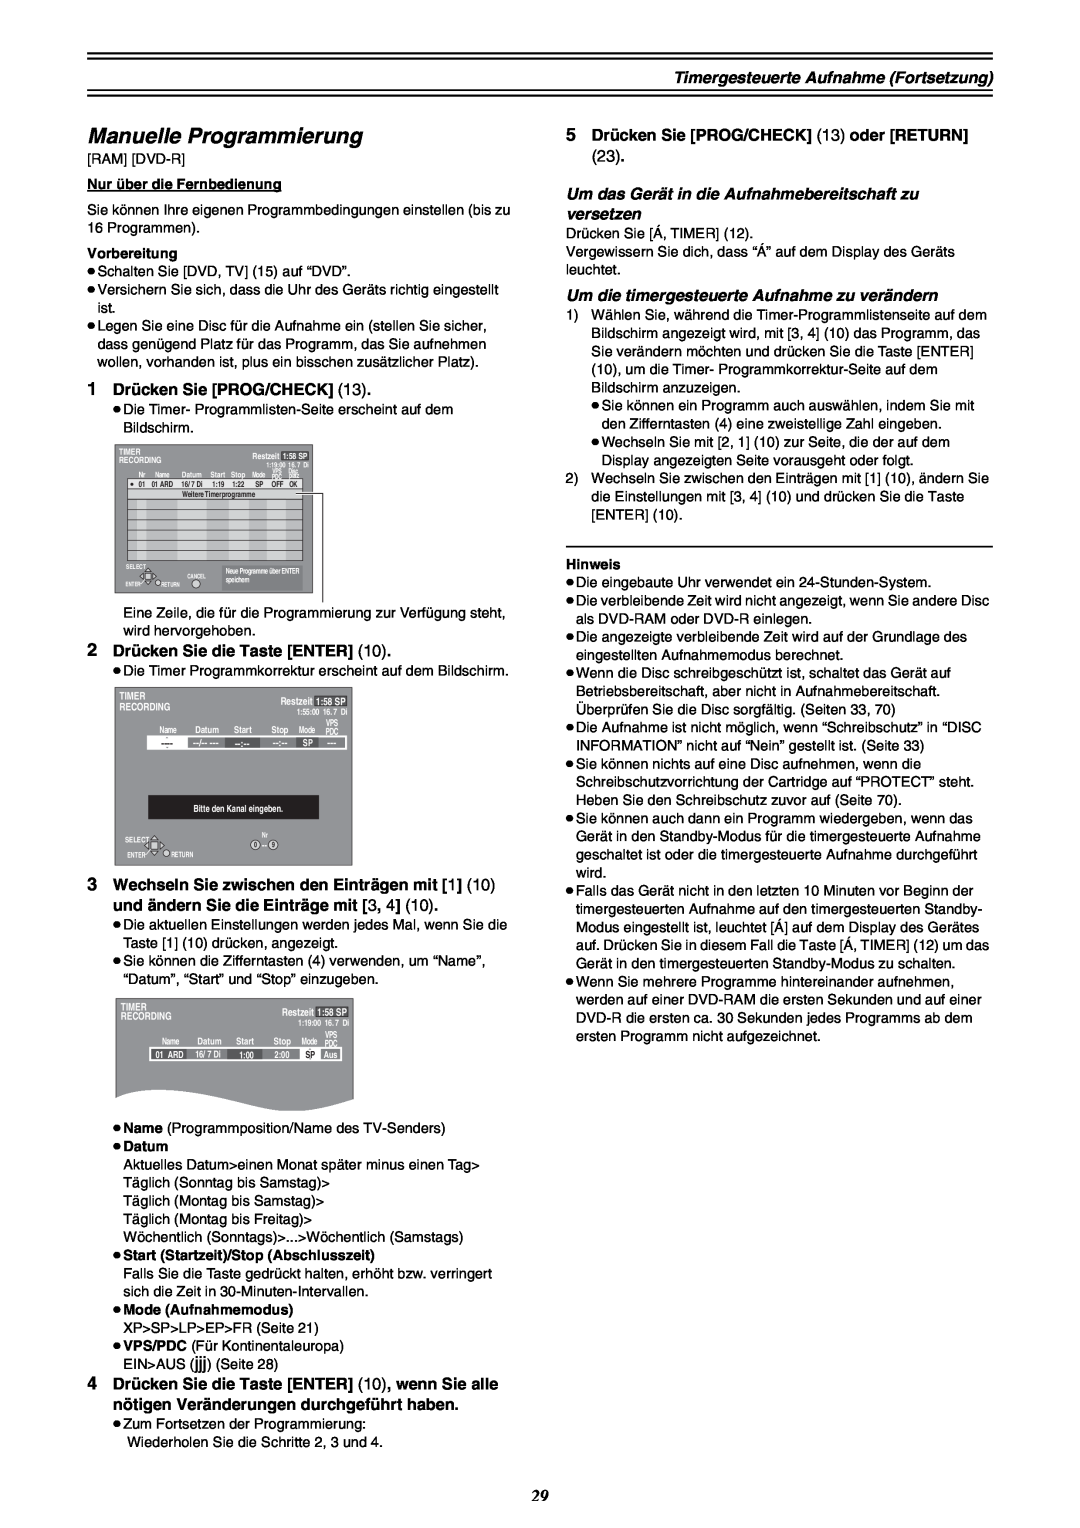 Panasonic DMR-E30 manual Manuelle Programmierung 